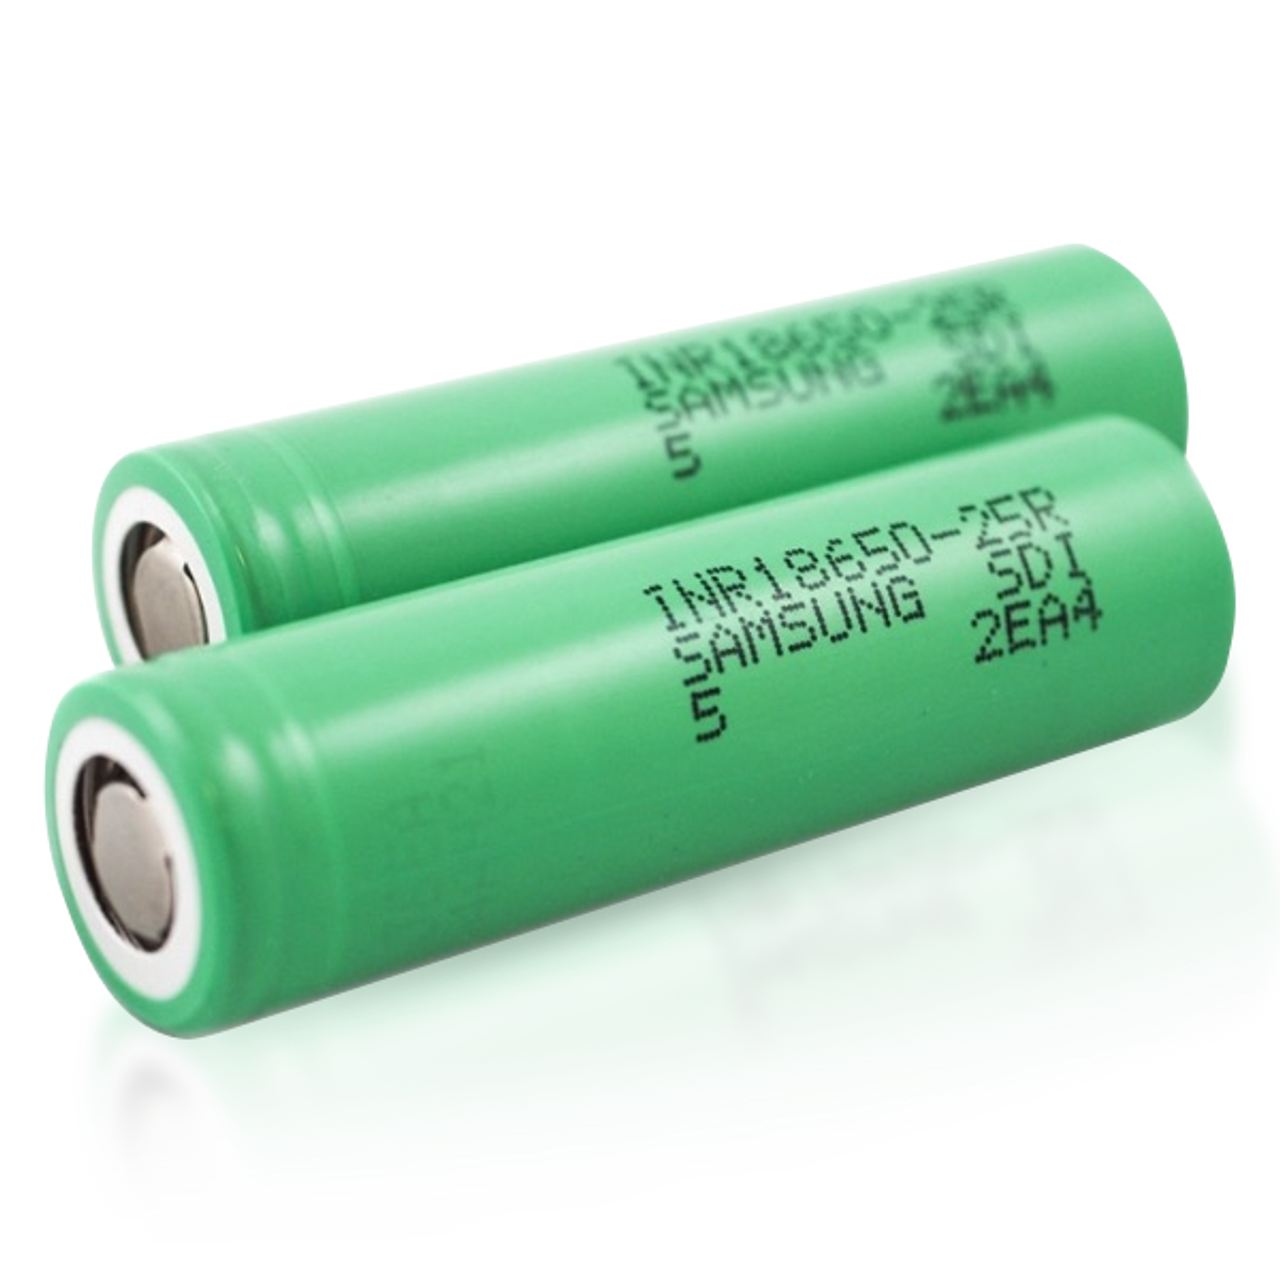 Samsung 25R 2500 mAh 35A Battery